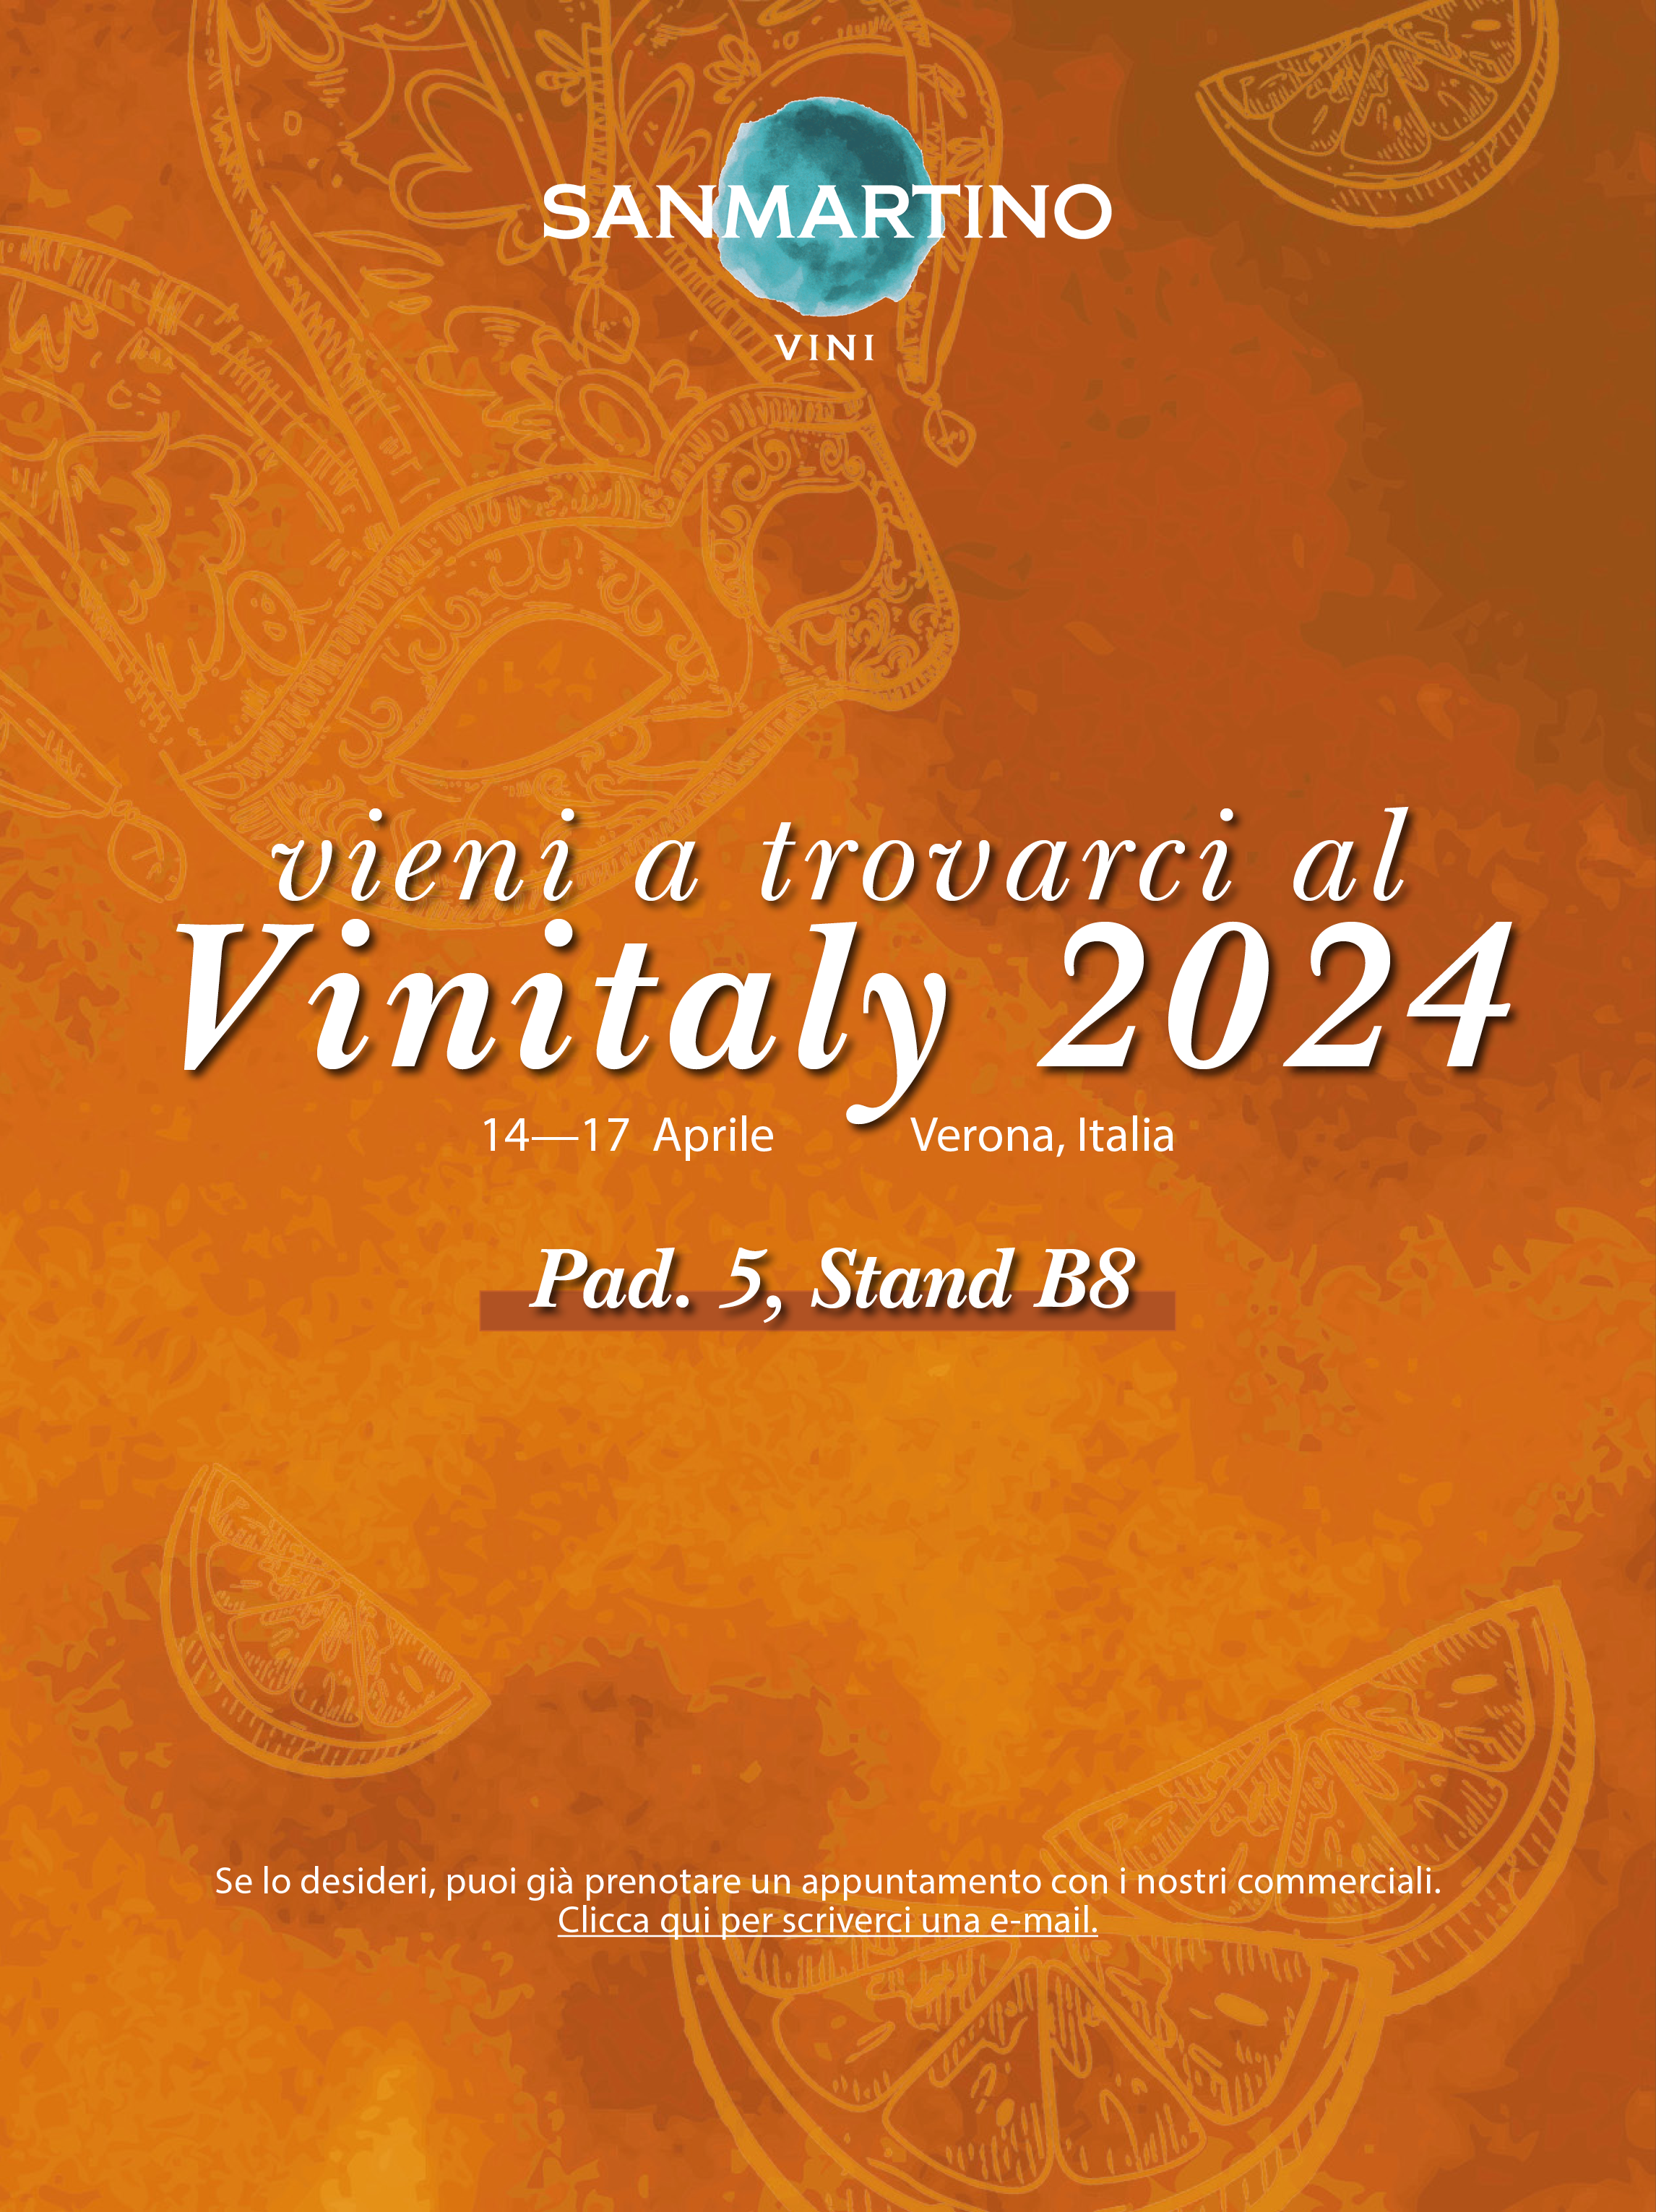 Vieni a trovarci al Vinitaly 2024